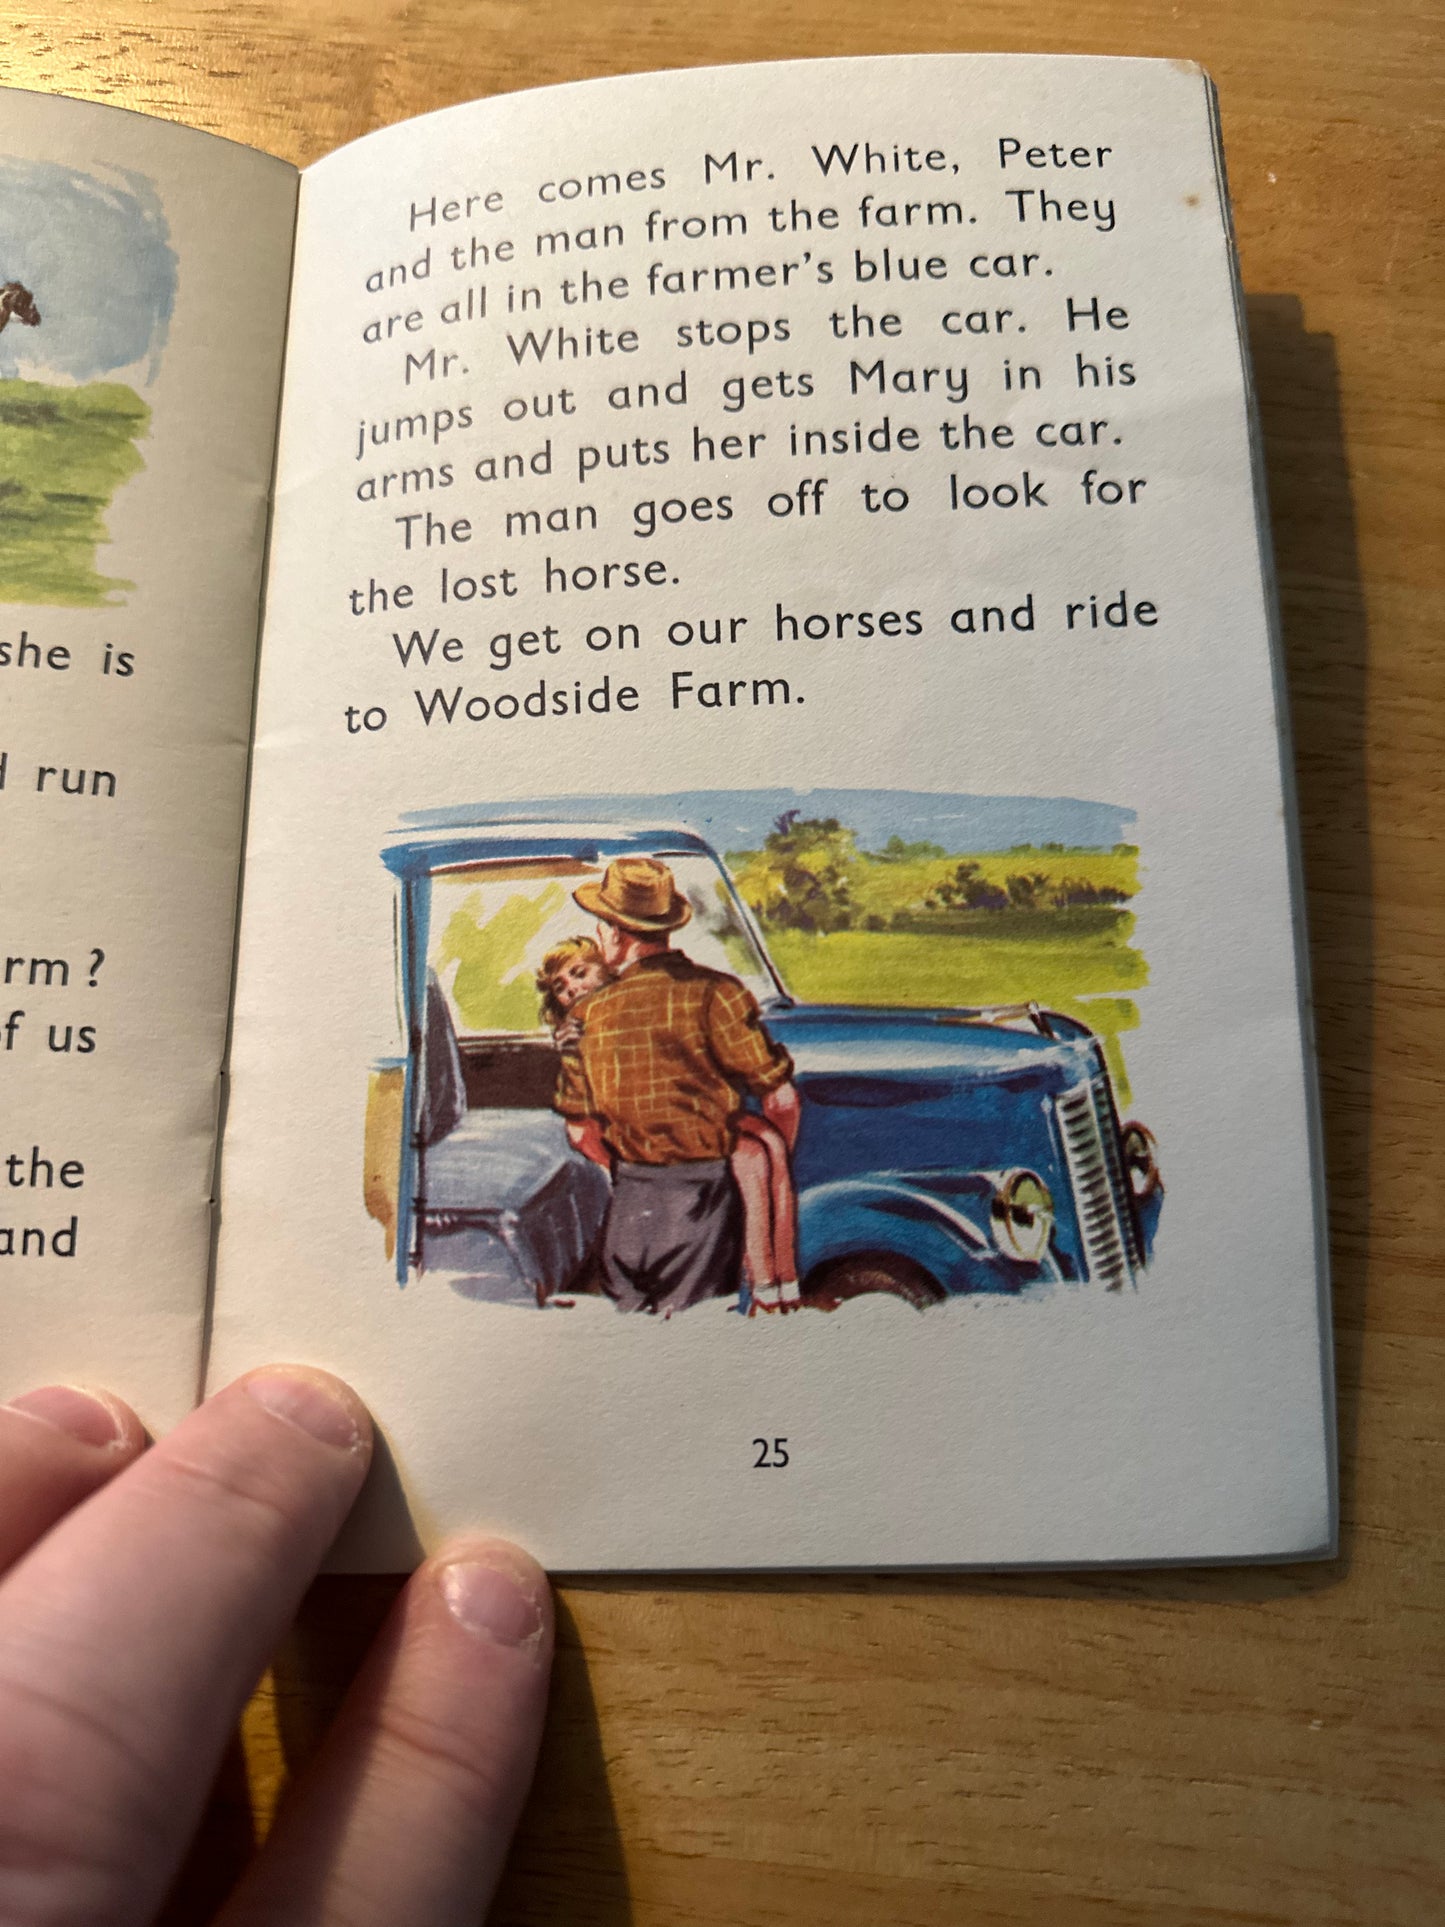 1962*1st* Racing To Read Bk13 Woodside Farm - A. E. Tansley & R. H. Nicholls(F. Pash illustration) E. J. Arnold & Son Ltd.